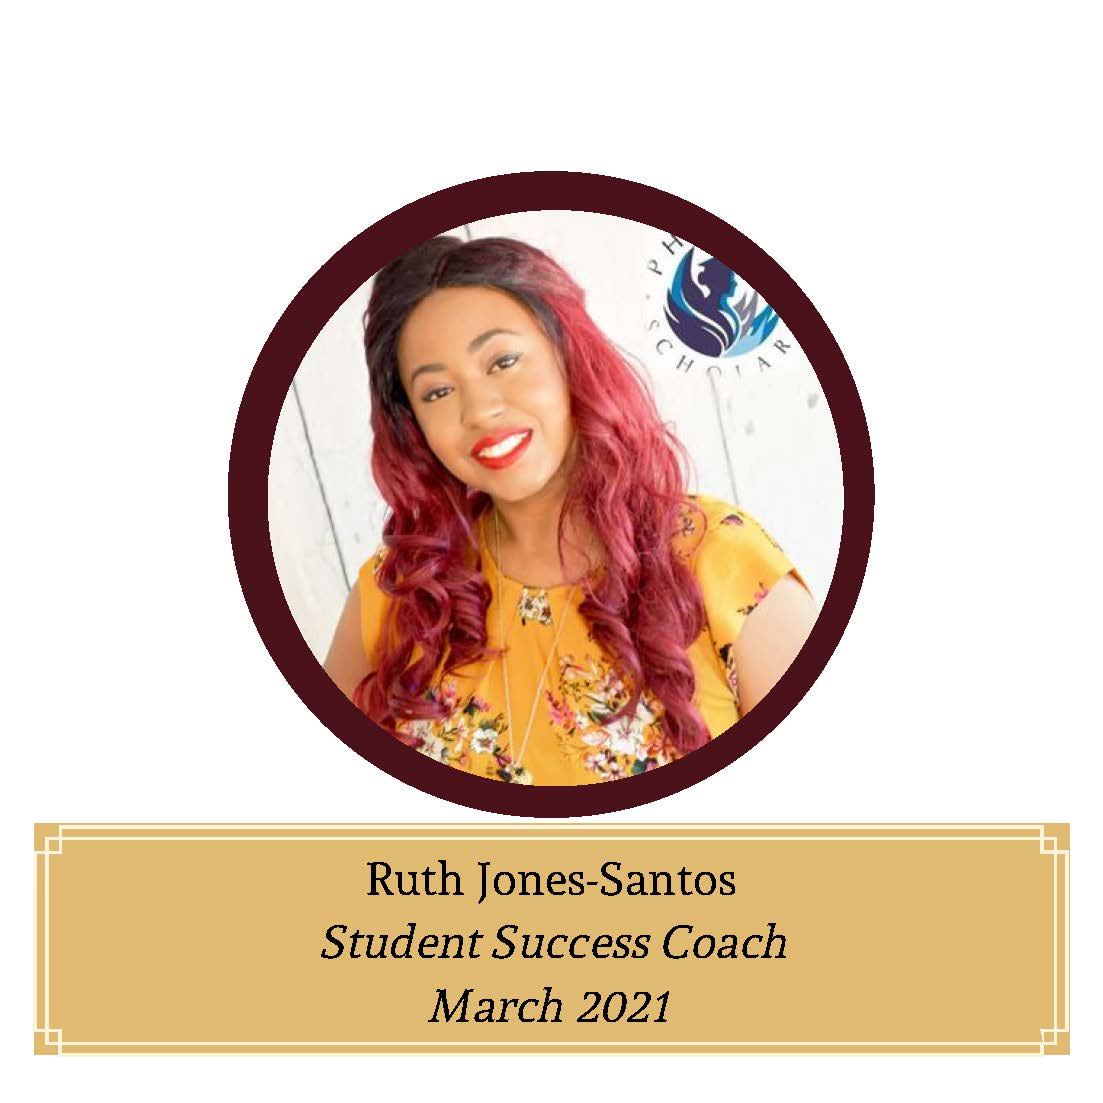 Ruth Jones-Santos